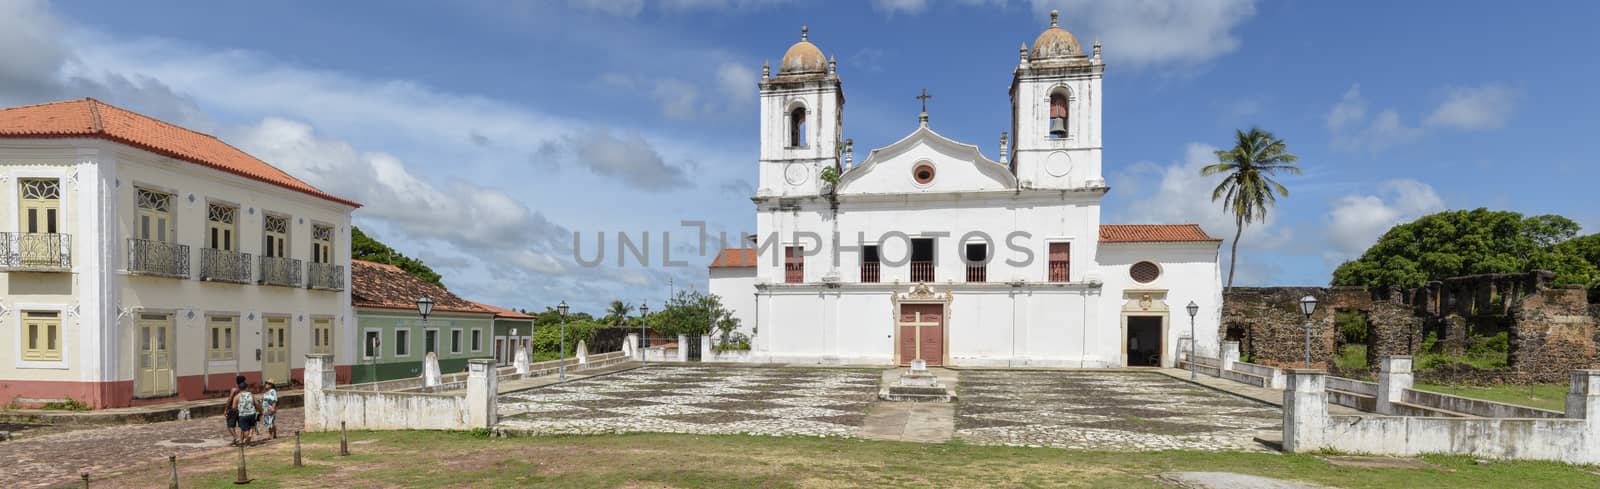 Nossa Senhora do Carmo church colonial architecture in Alcantara by Fotoember